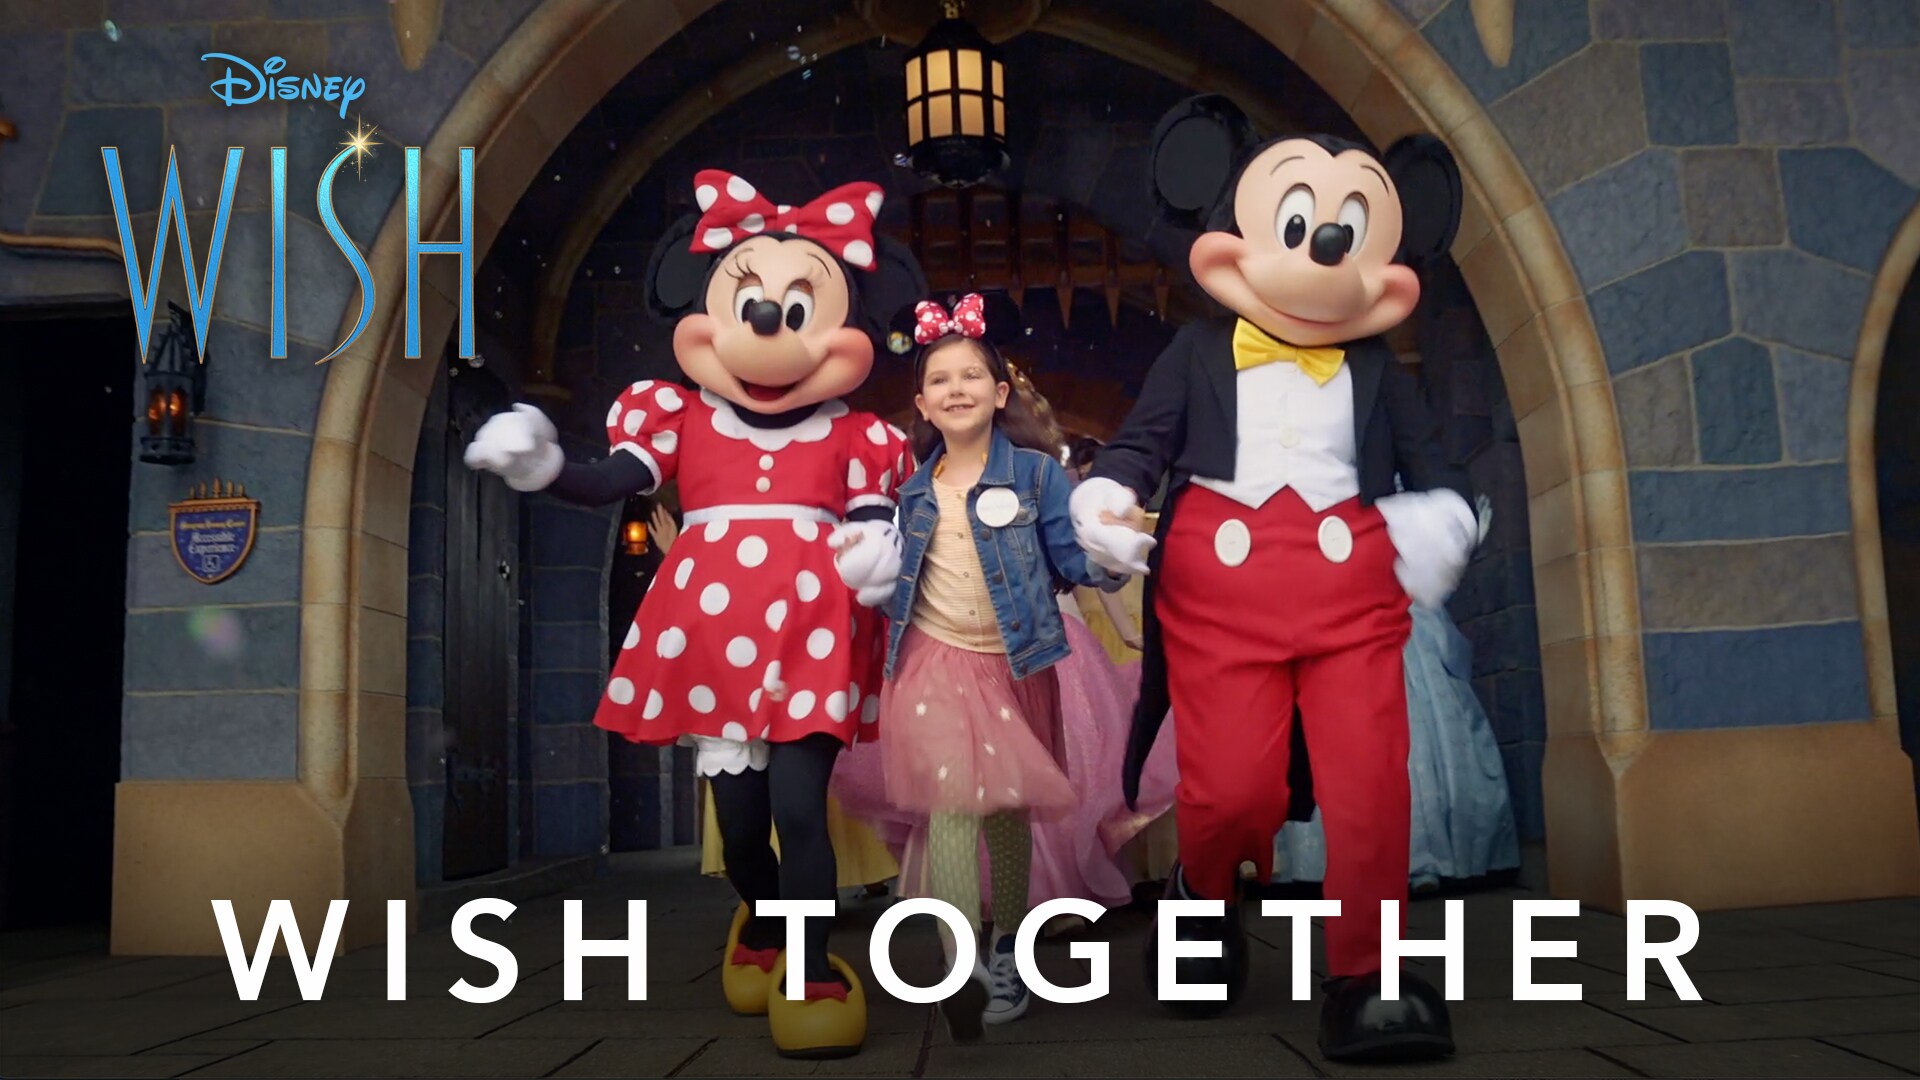 Disney Wish - Wish Together